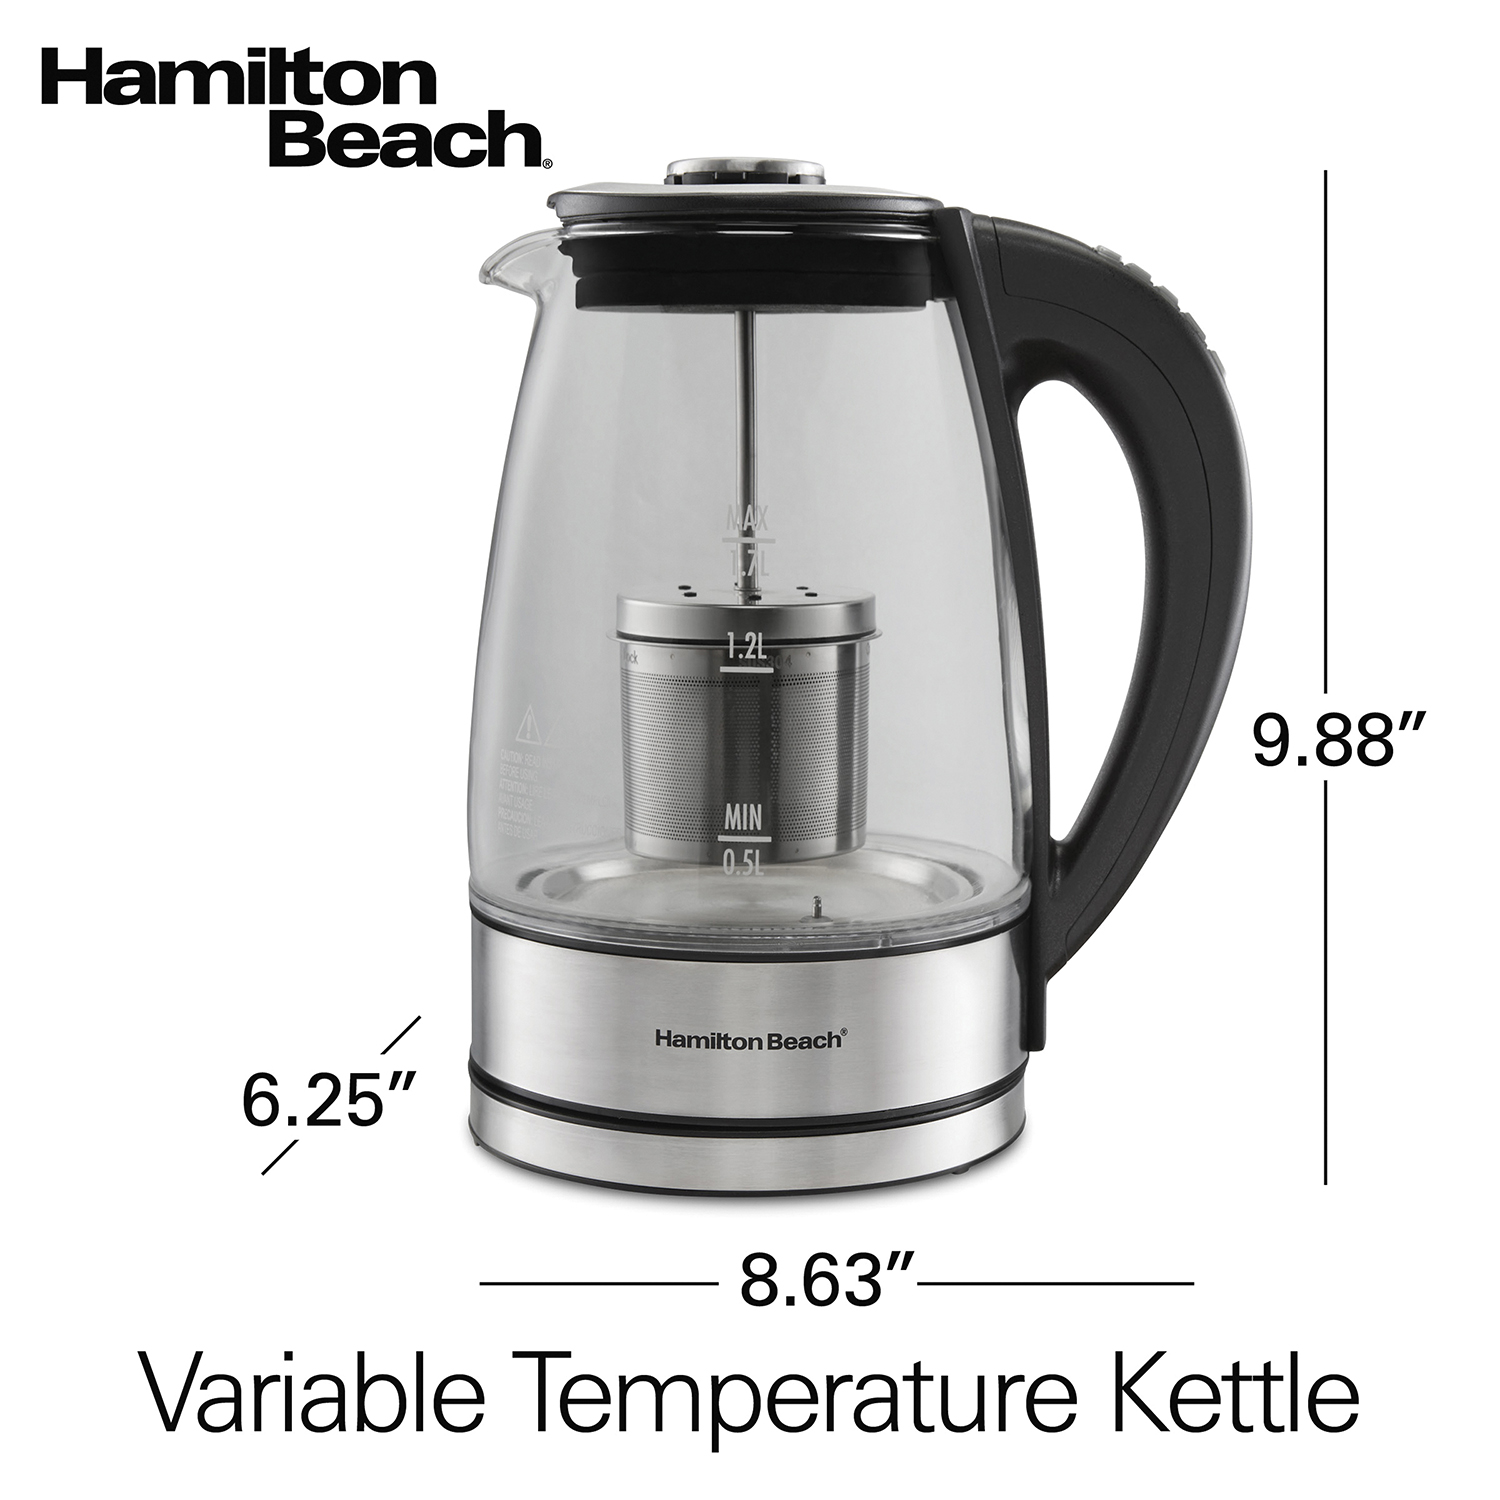 Hamilton Beach® Variable Temperature Electric Kettle 1.7 Liter